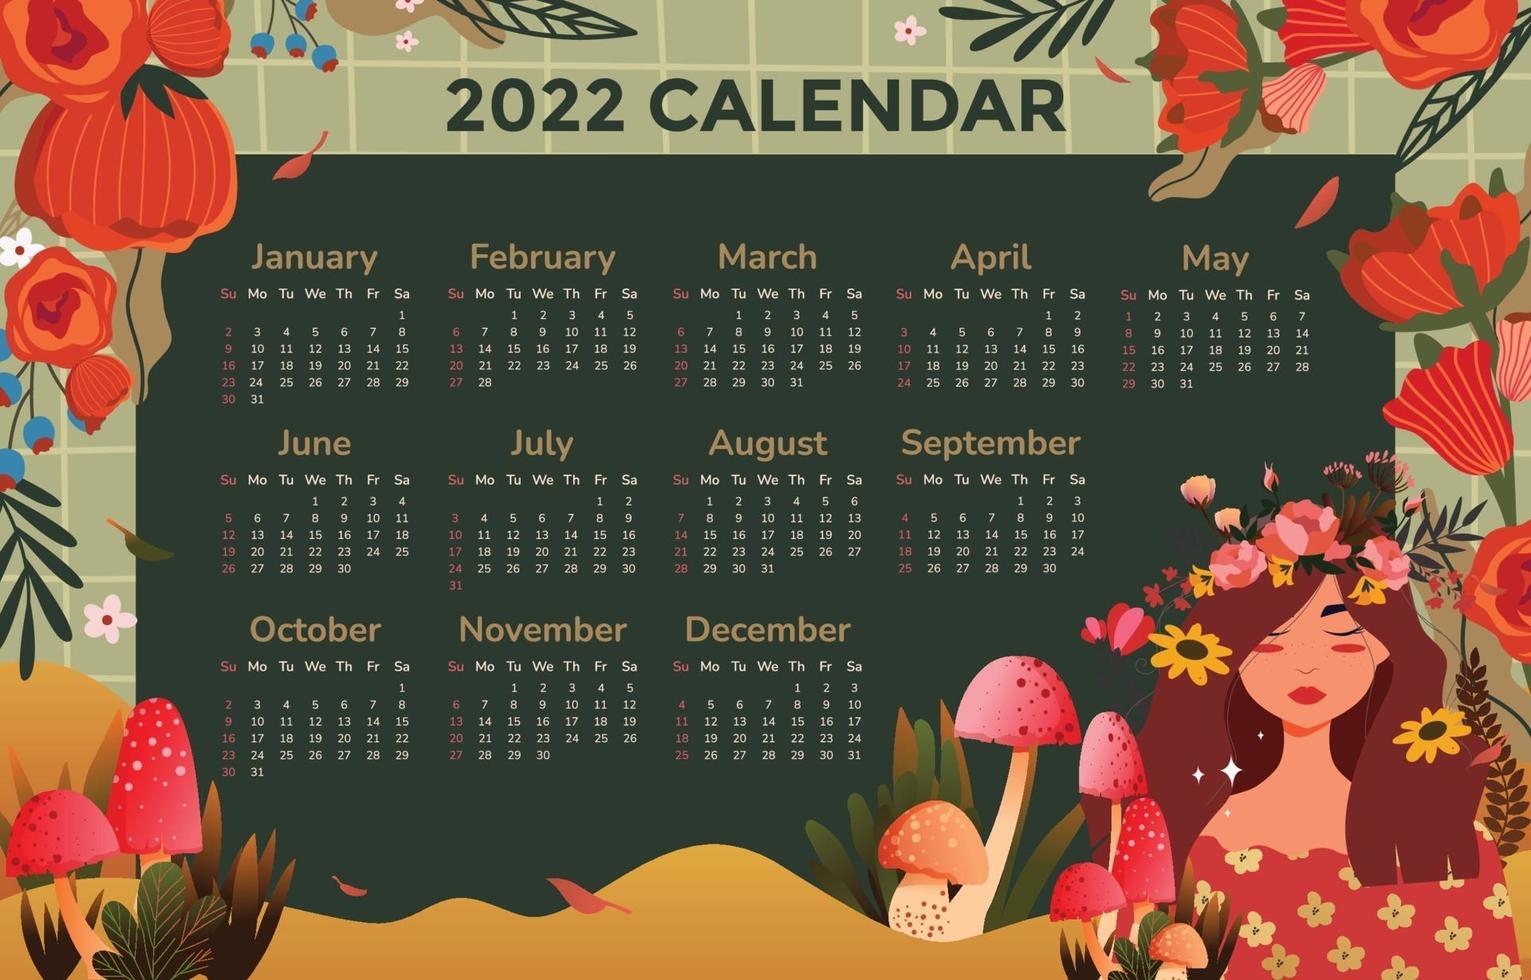 Template Calendar 2022 with Beautiful Ornament vector